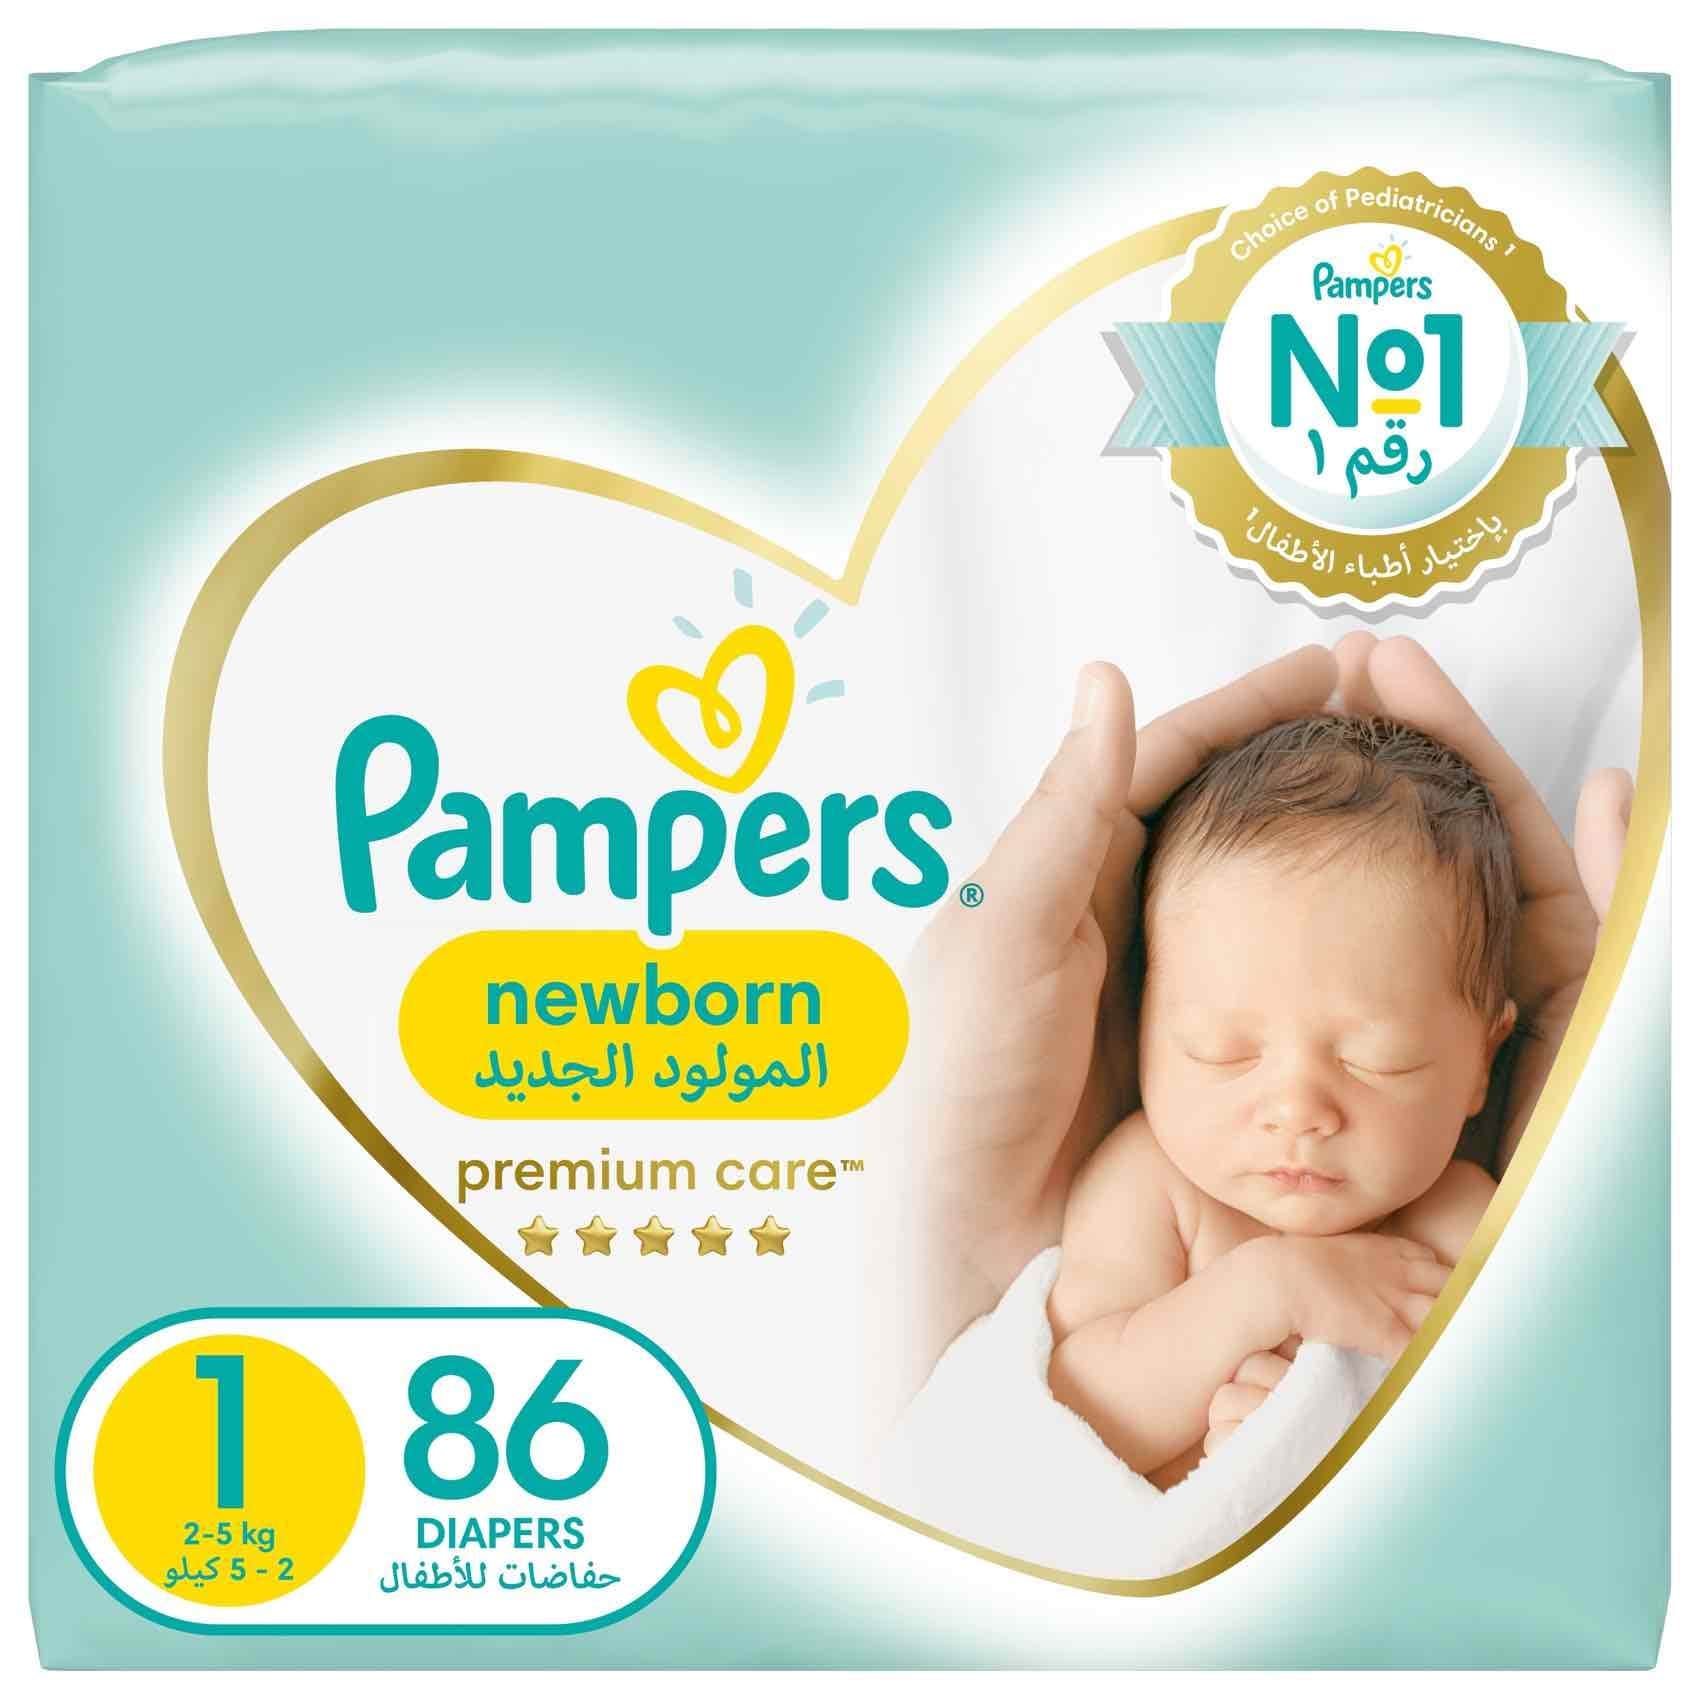 Buy Pampers Premium Care Diapers Newborn Size 1 2-5kg Jumbo Pack 86